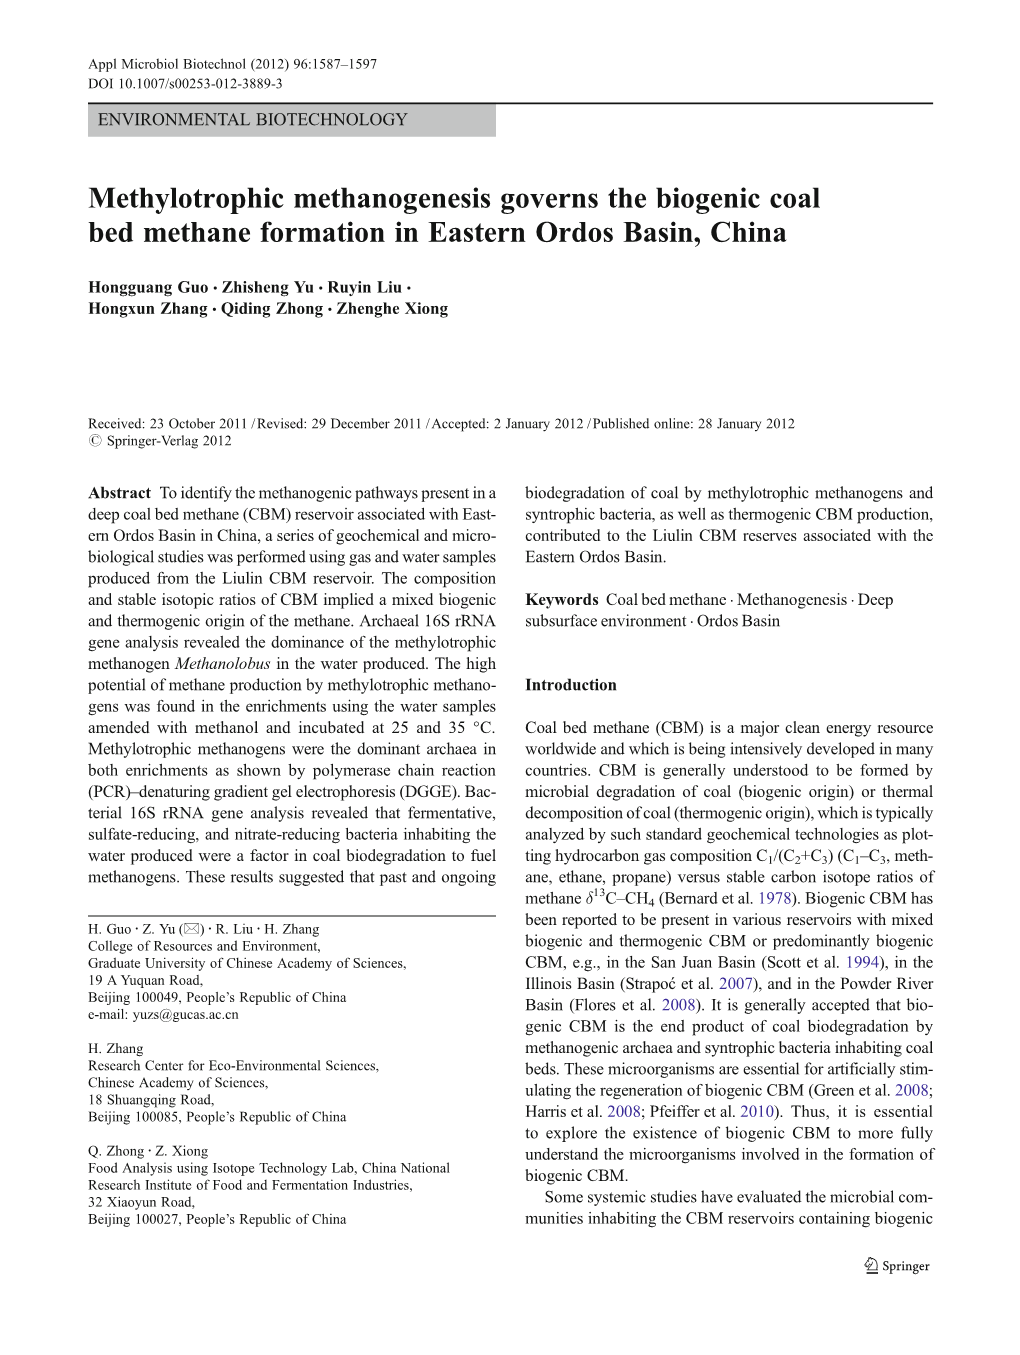 Methylotrophic Methanogenesis Governs the Biogenic Coal Bed Methane Formation in Eastern Ordos Basin, China